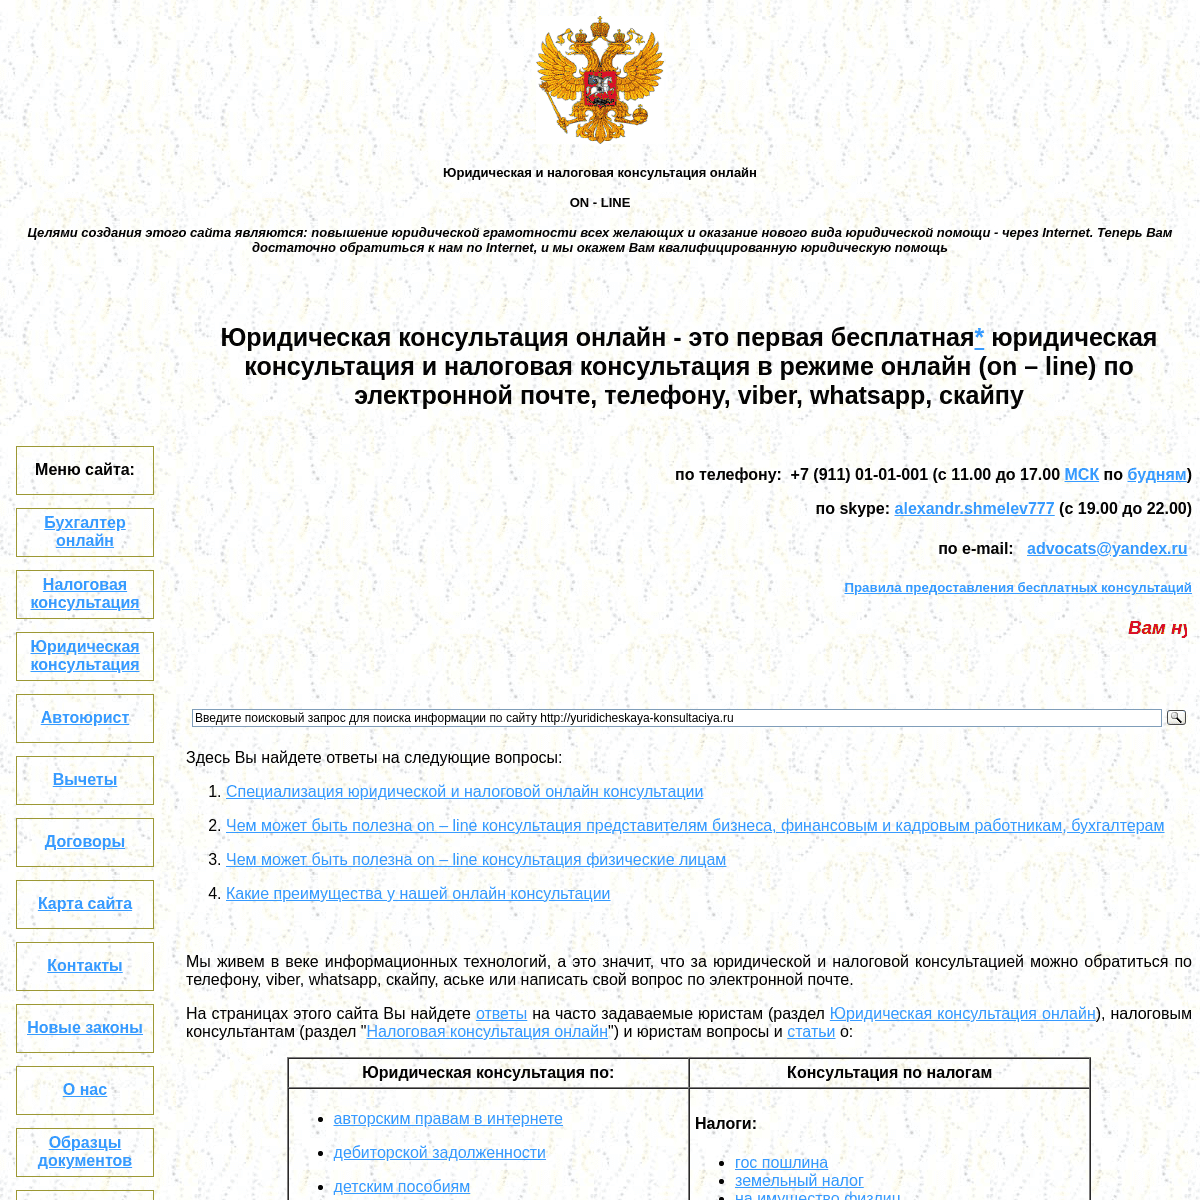 A complete backup of https://yuridicheskaya-konsultaciya.ru